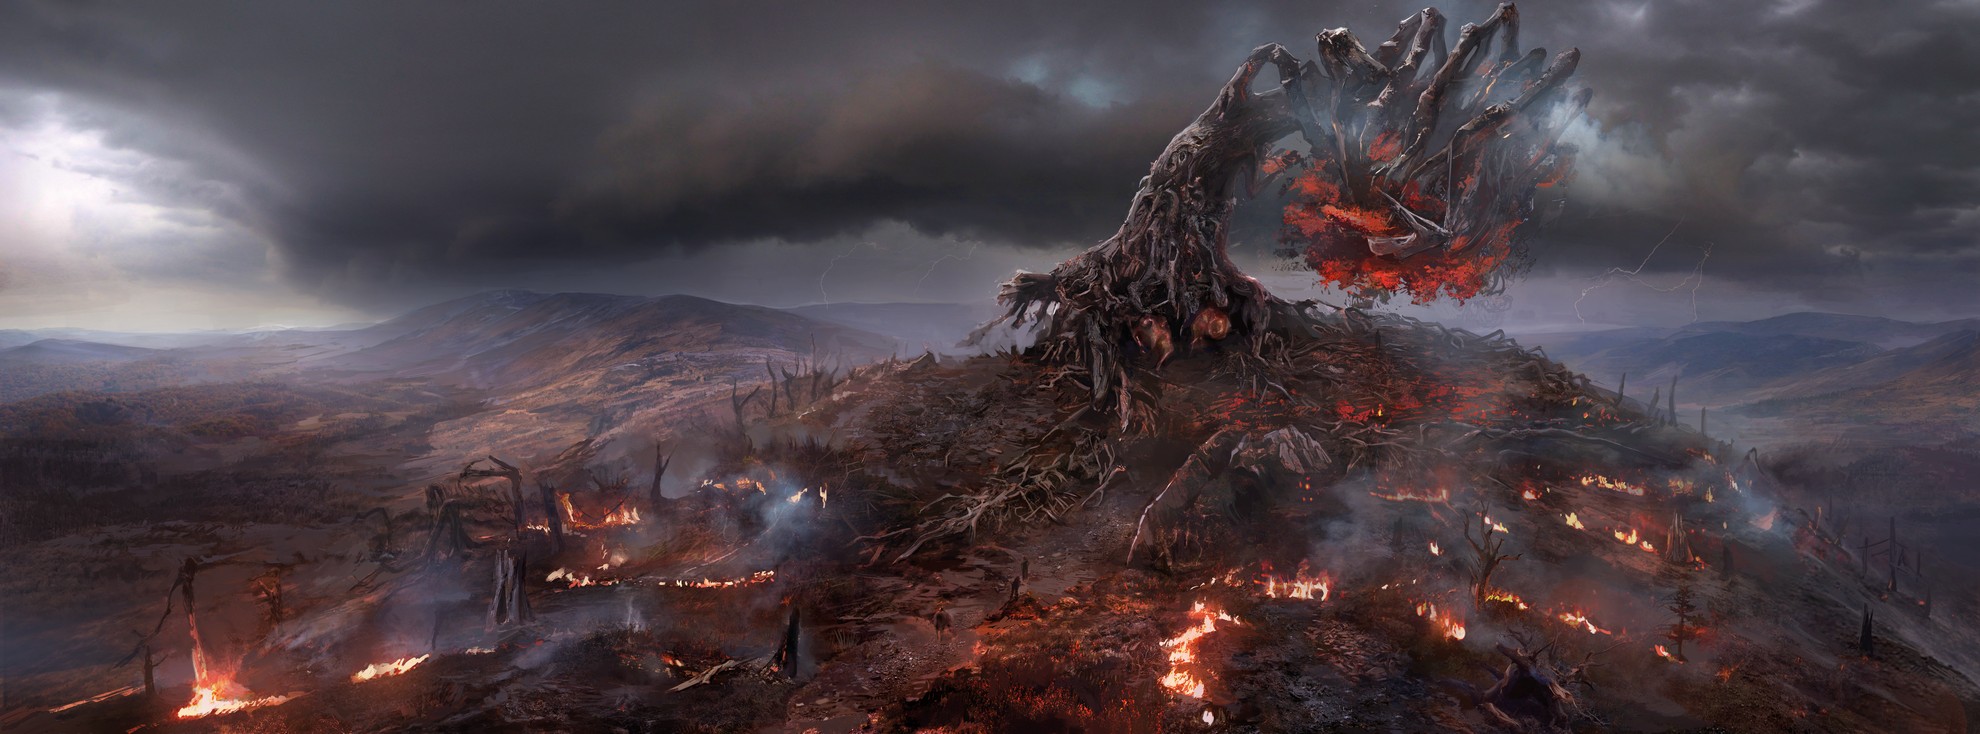 1371179383-a-demonic-tree-among-conflagration